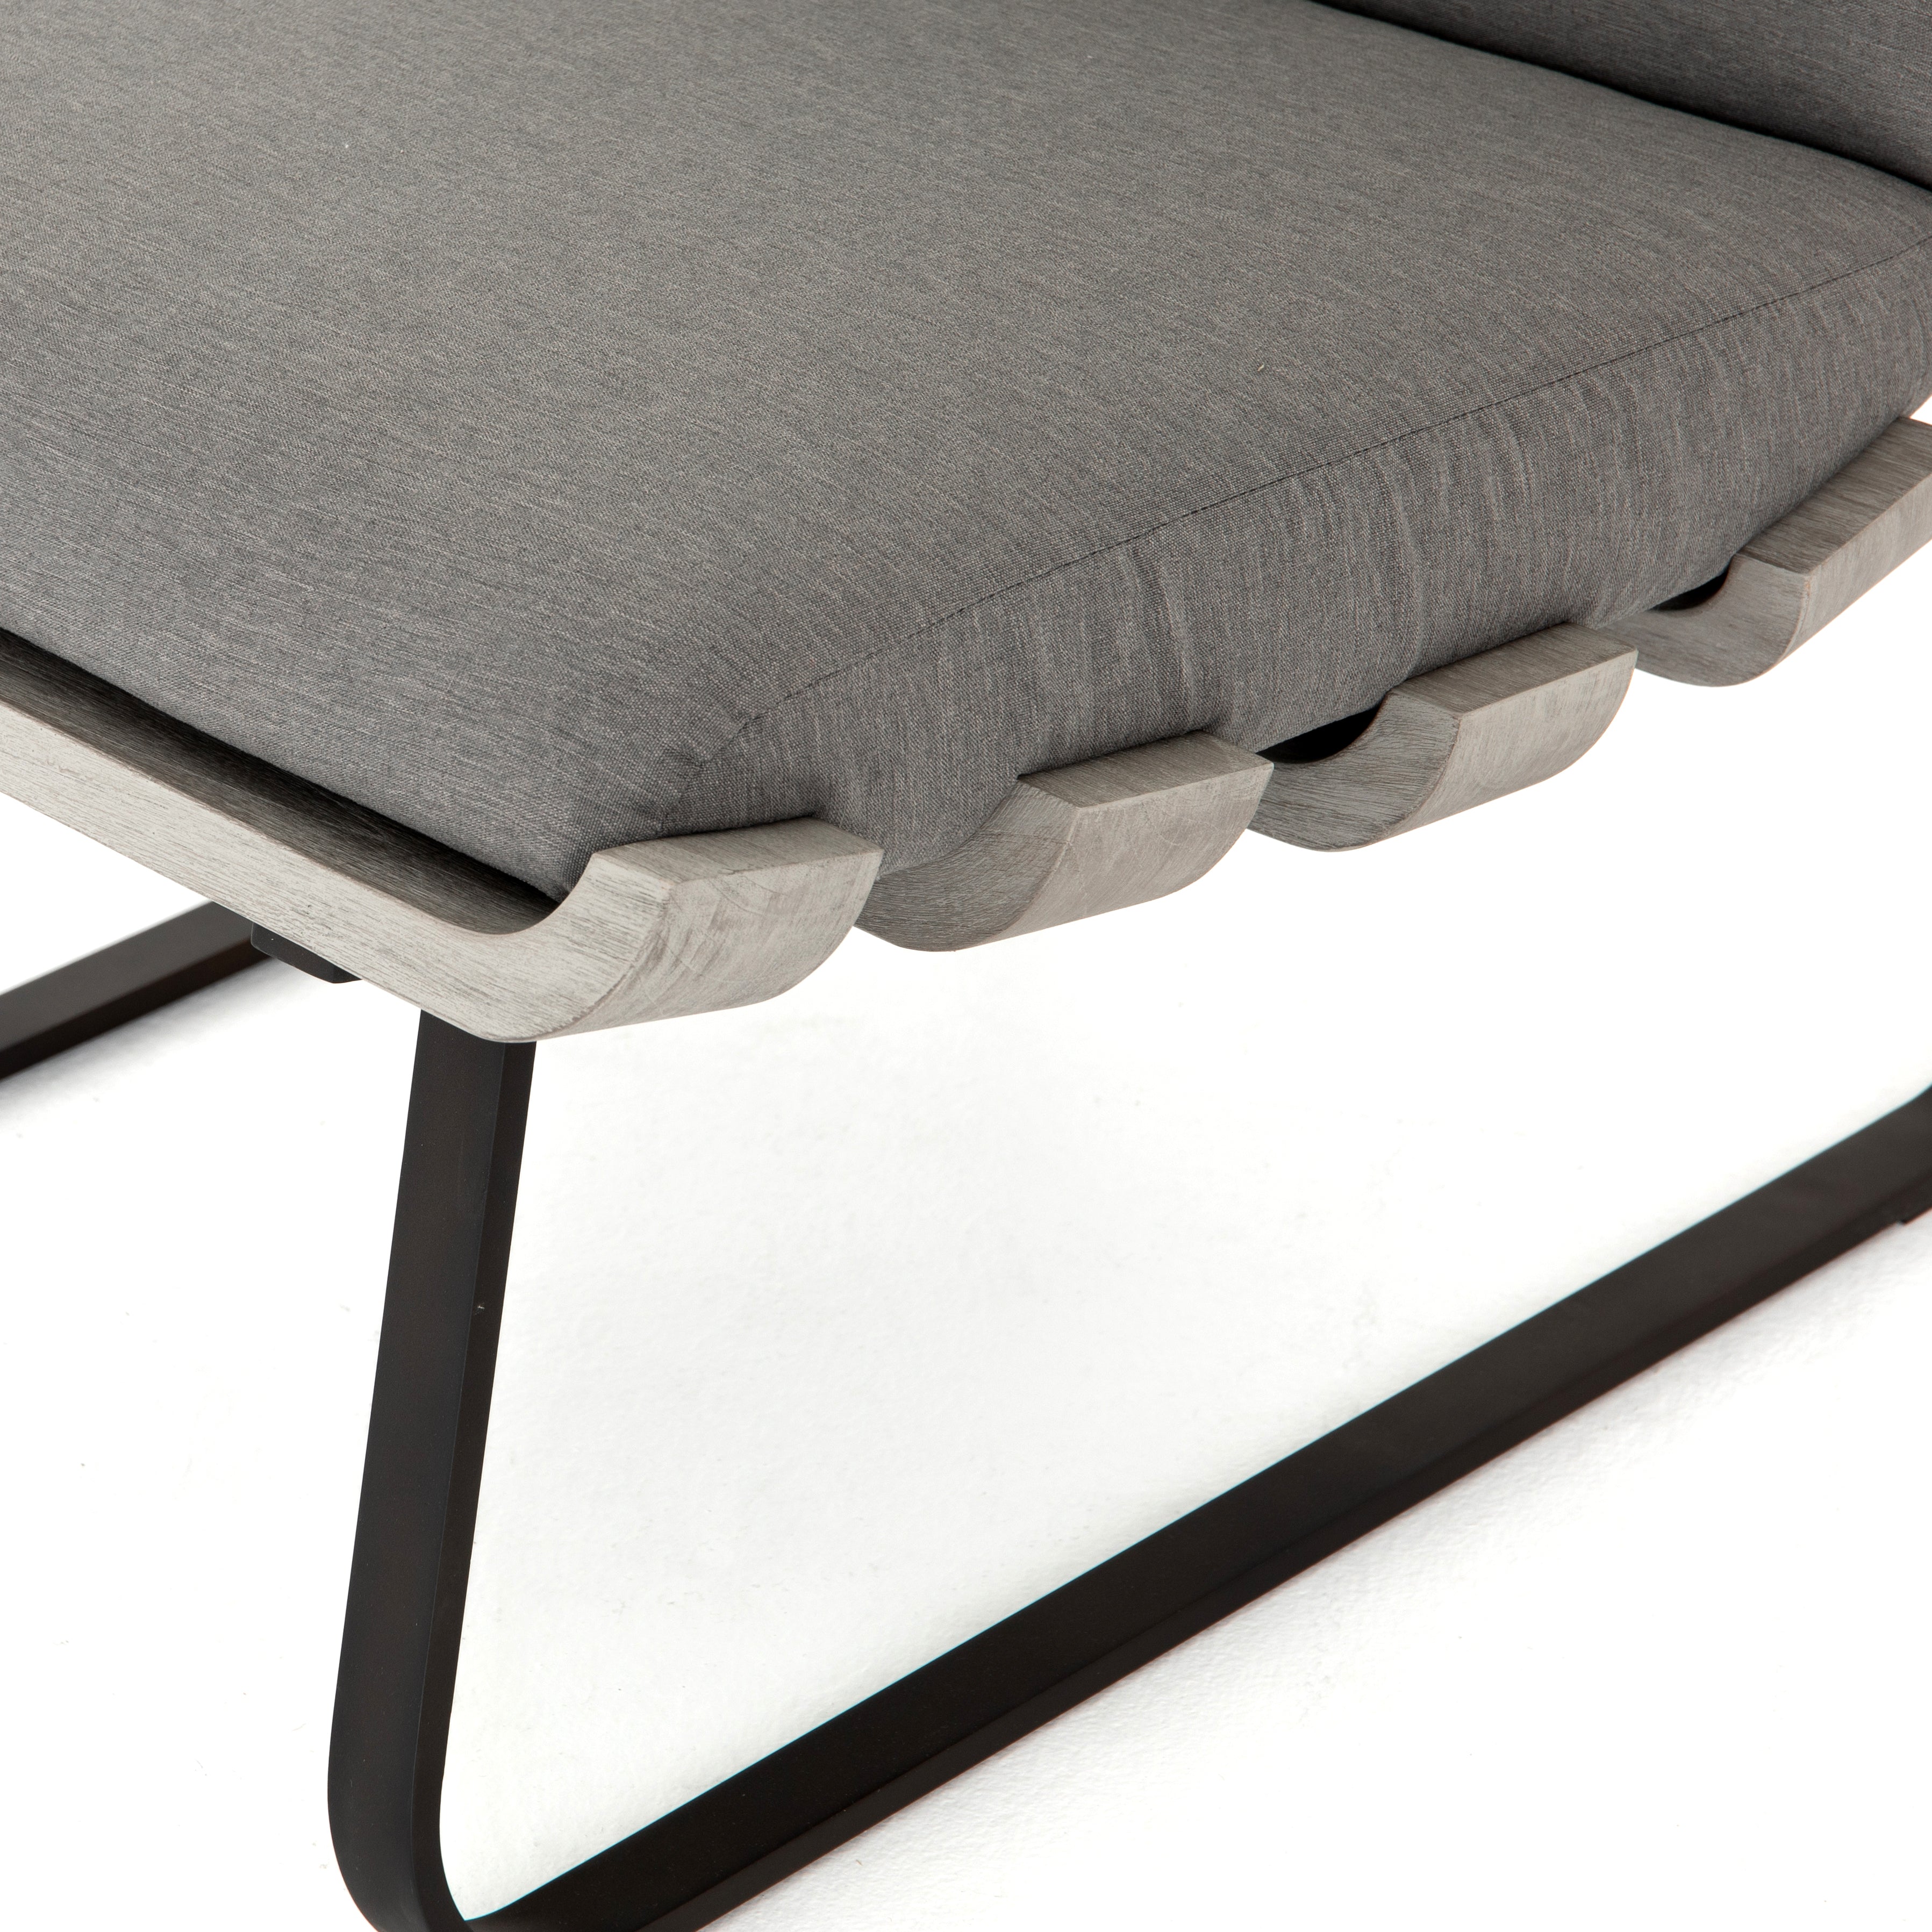 Dimitri Outdoor Chair - StyleMeGHD - Modern Outdoor Furniture